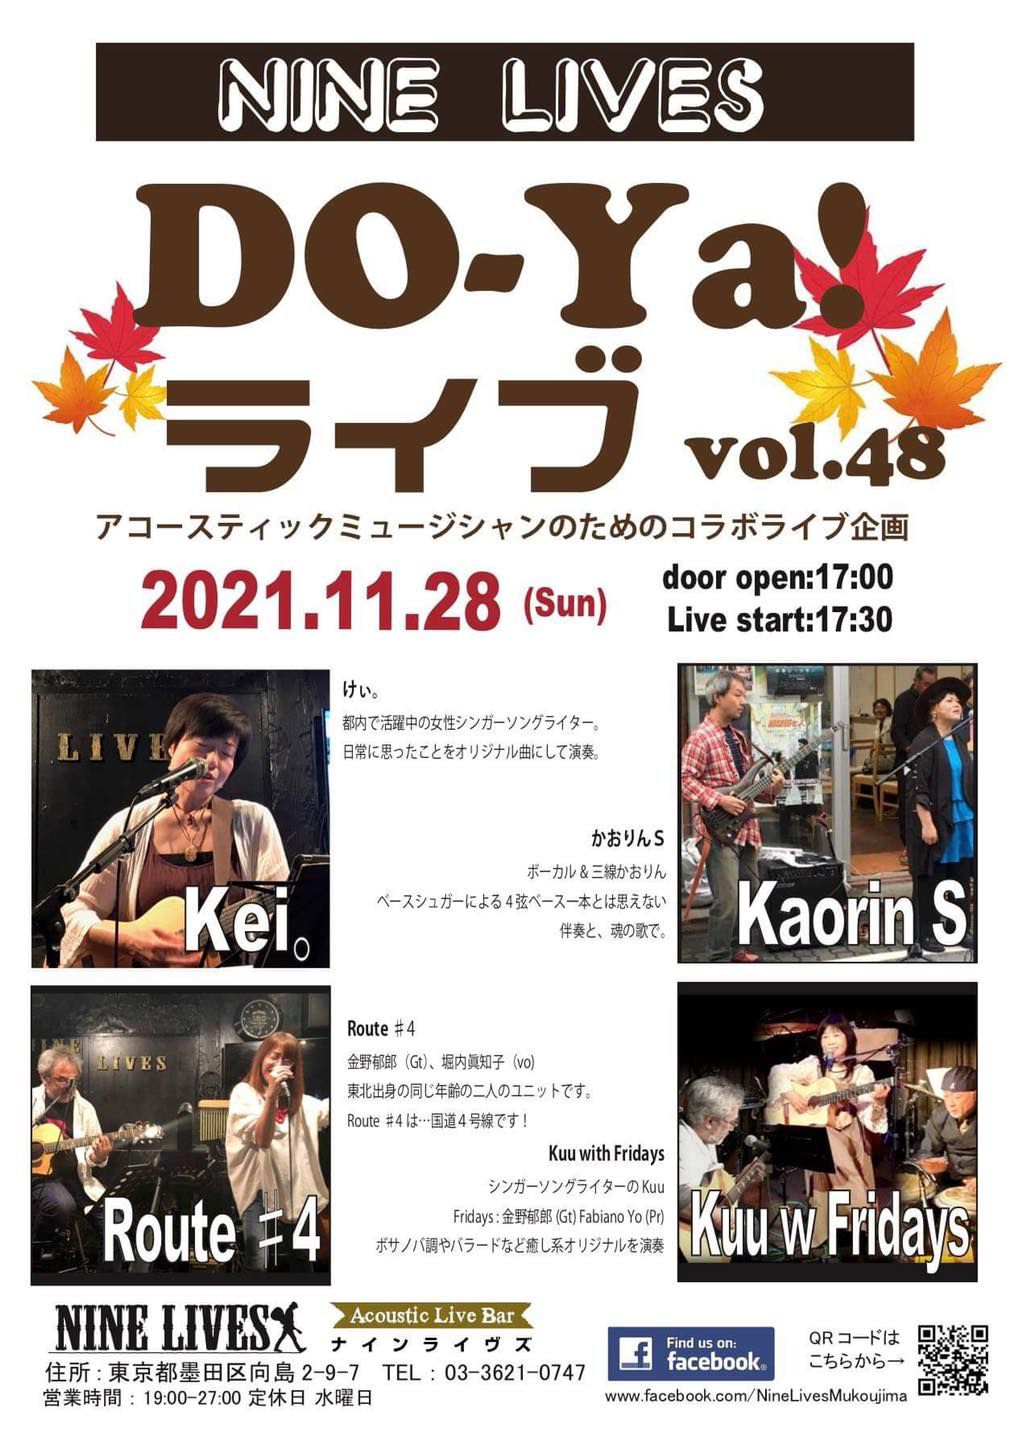 DO-Ya！ライブ Vol.48